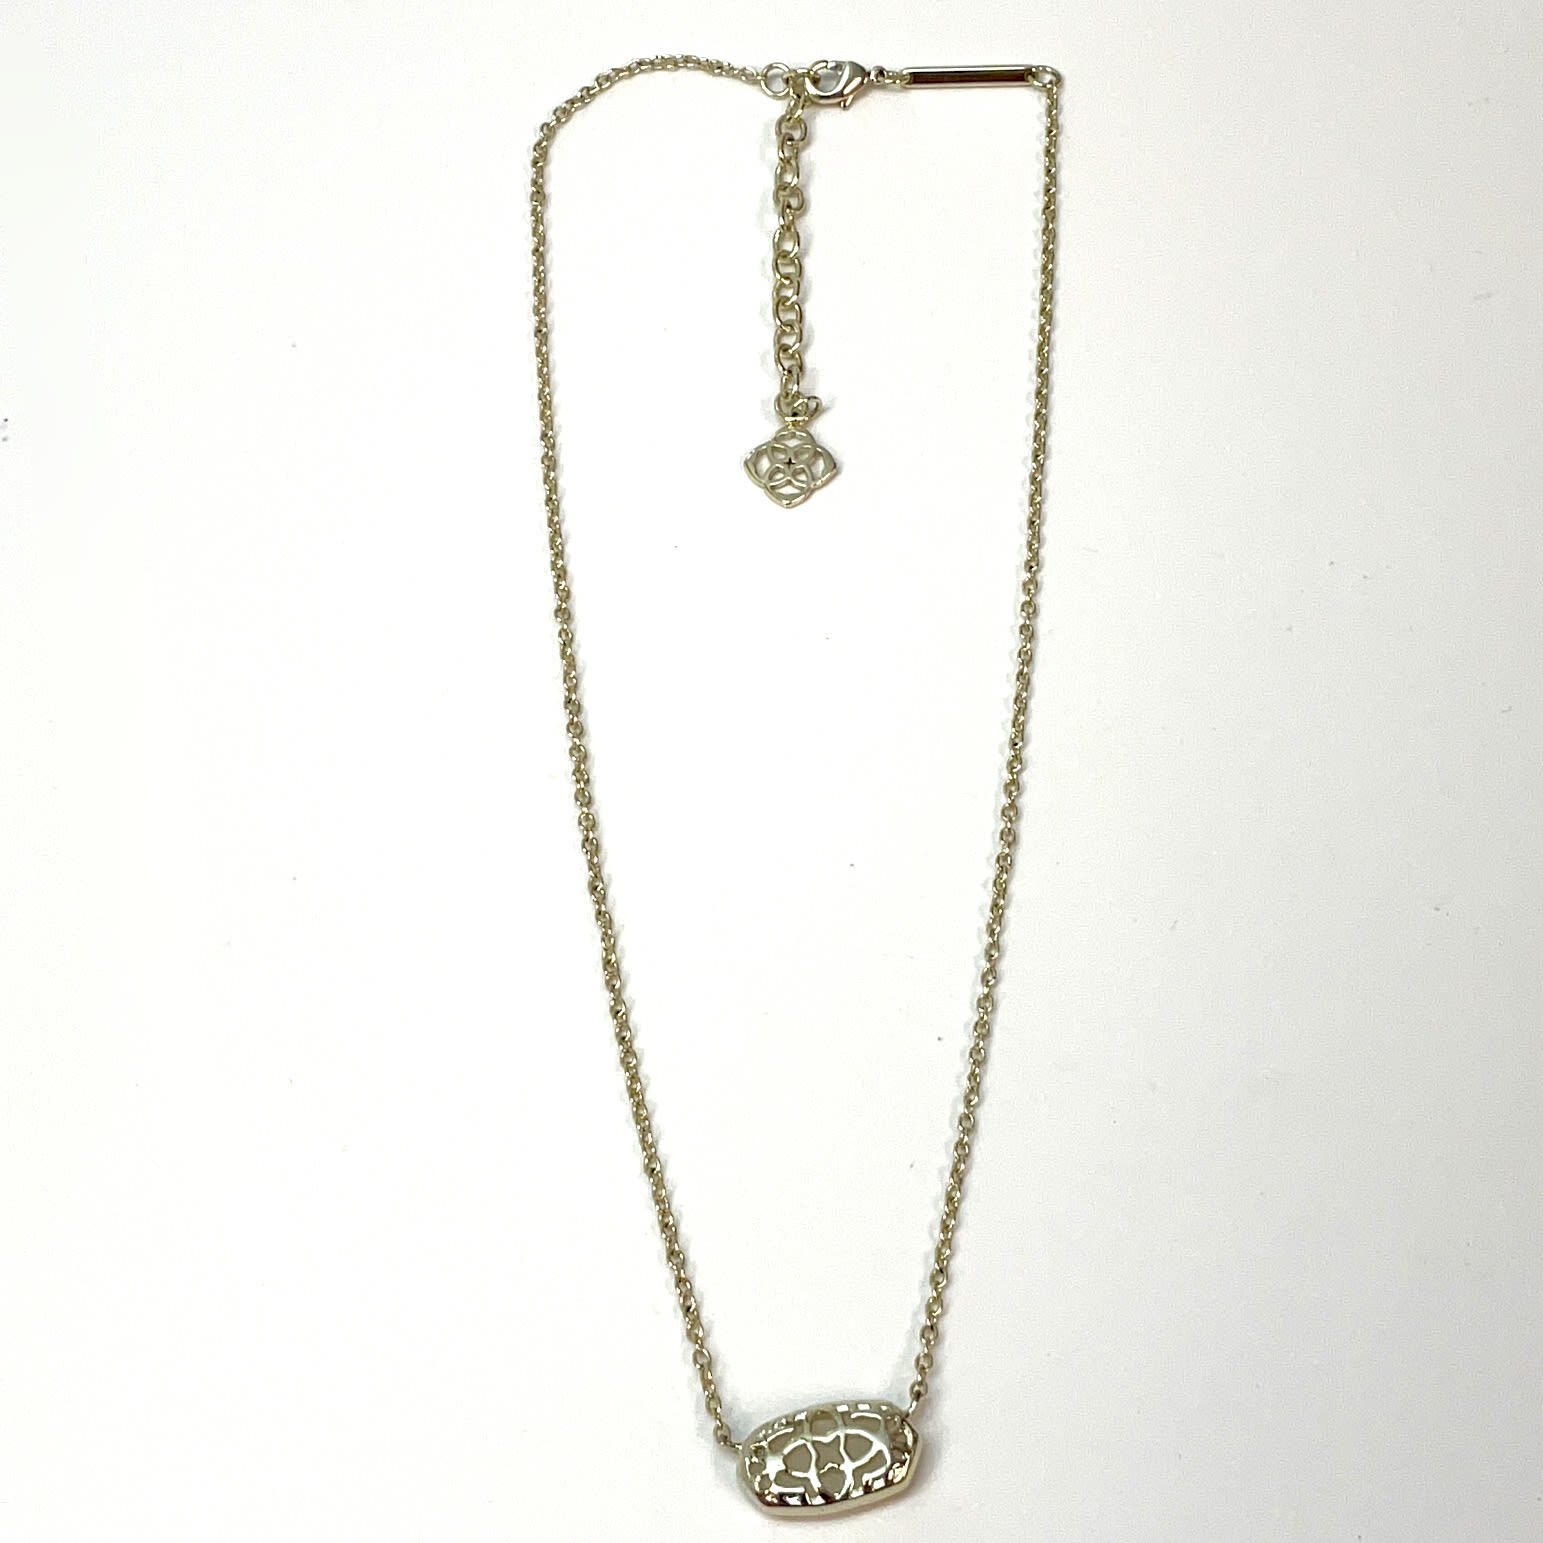 Kendra Scott Susie Pendant Necklace, Gold/Bright White Opal